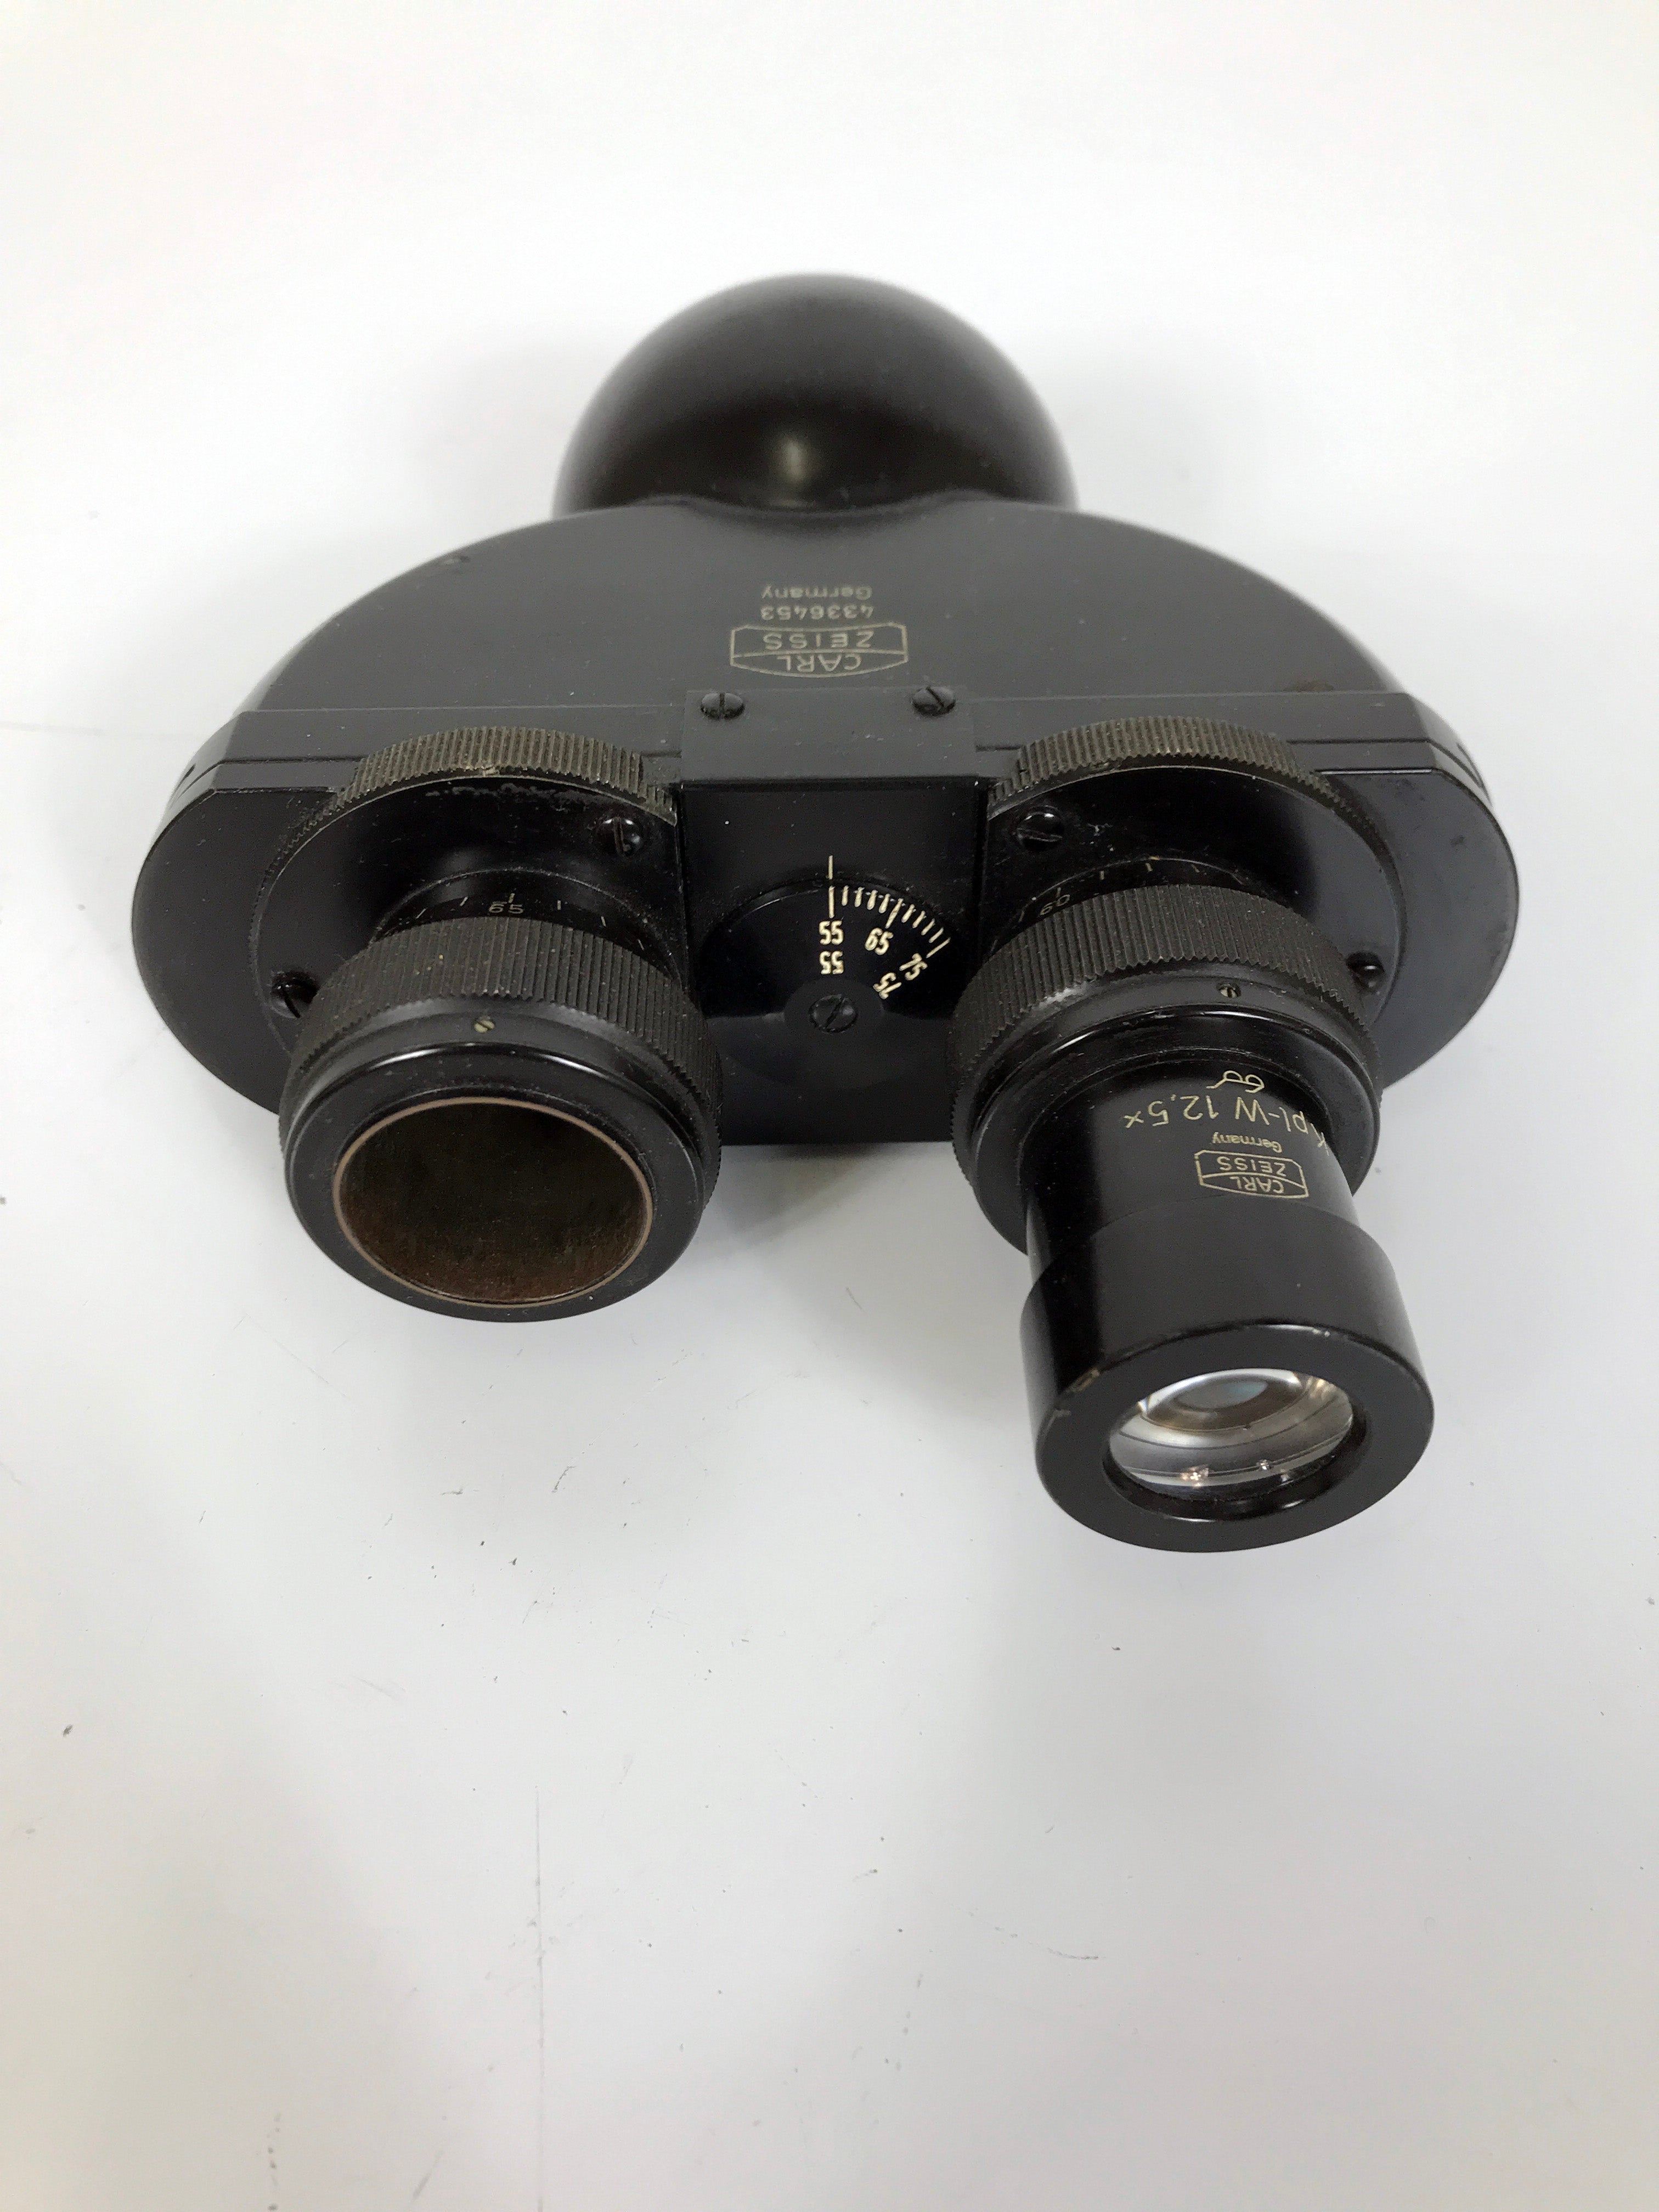 Vintage Carl Zeiss Binocular Microscope Head 4336453 *Missing One Eyepiece*